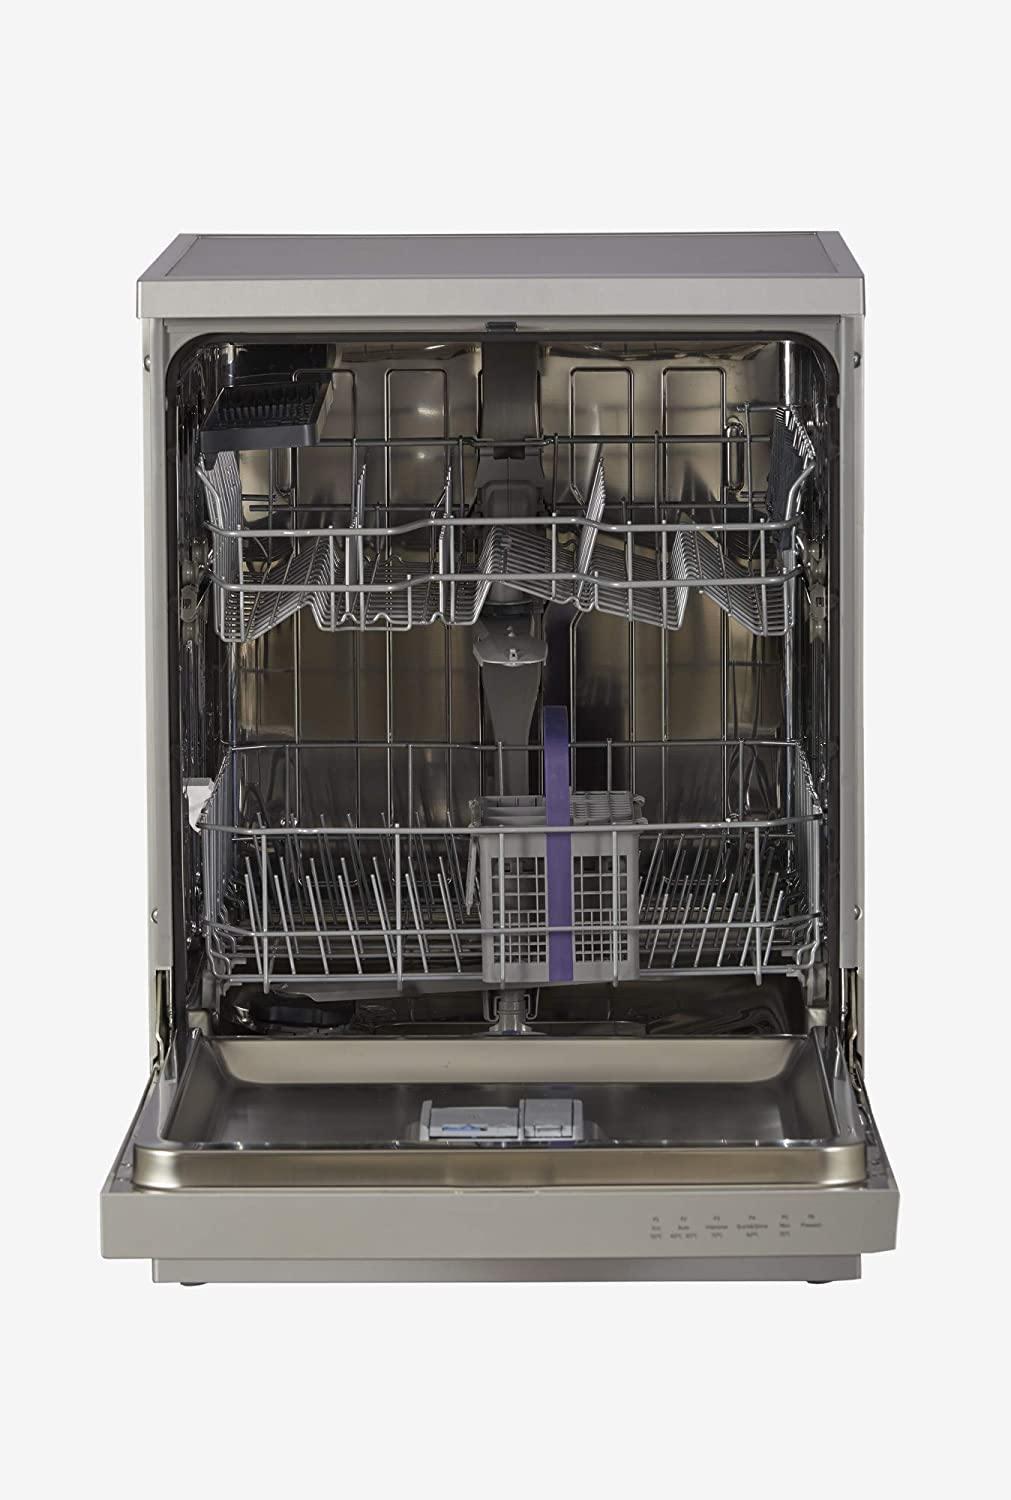 Voltas Beko 14 Place Settings Dishwasher (DF14S2, Silver) - Mahajan Electronics Online